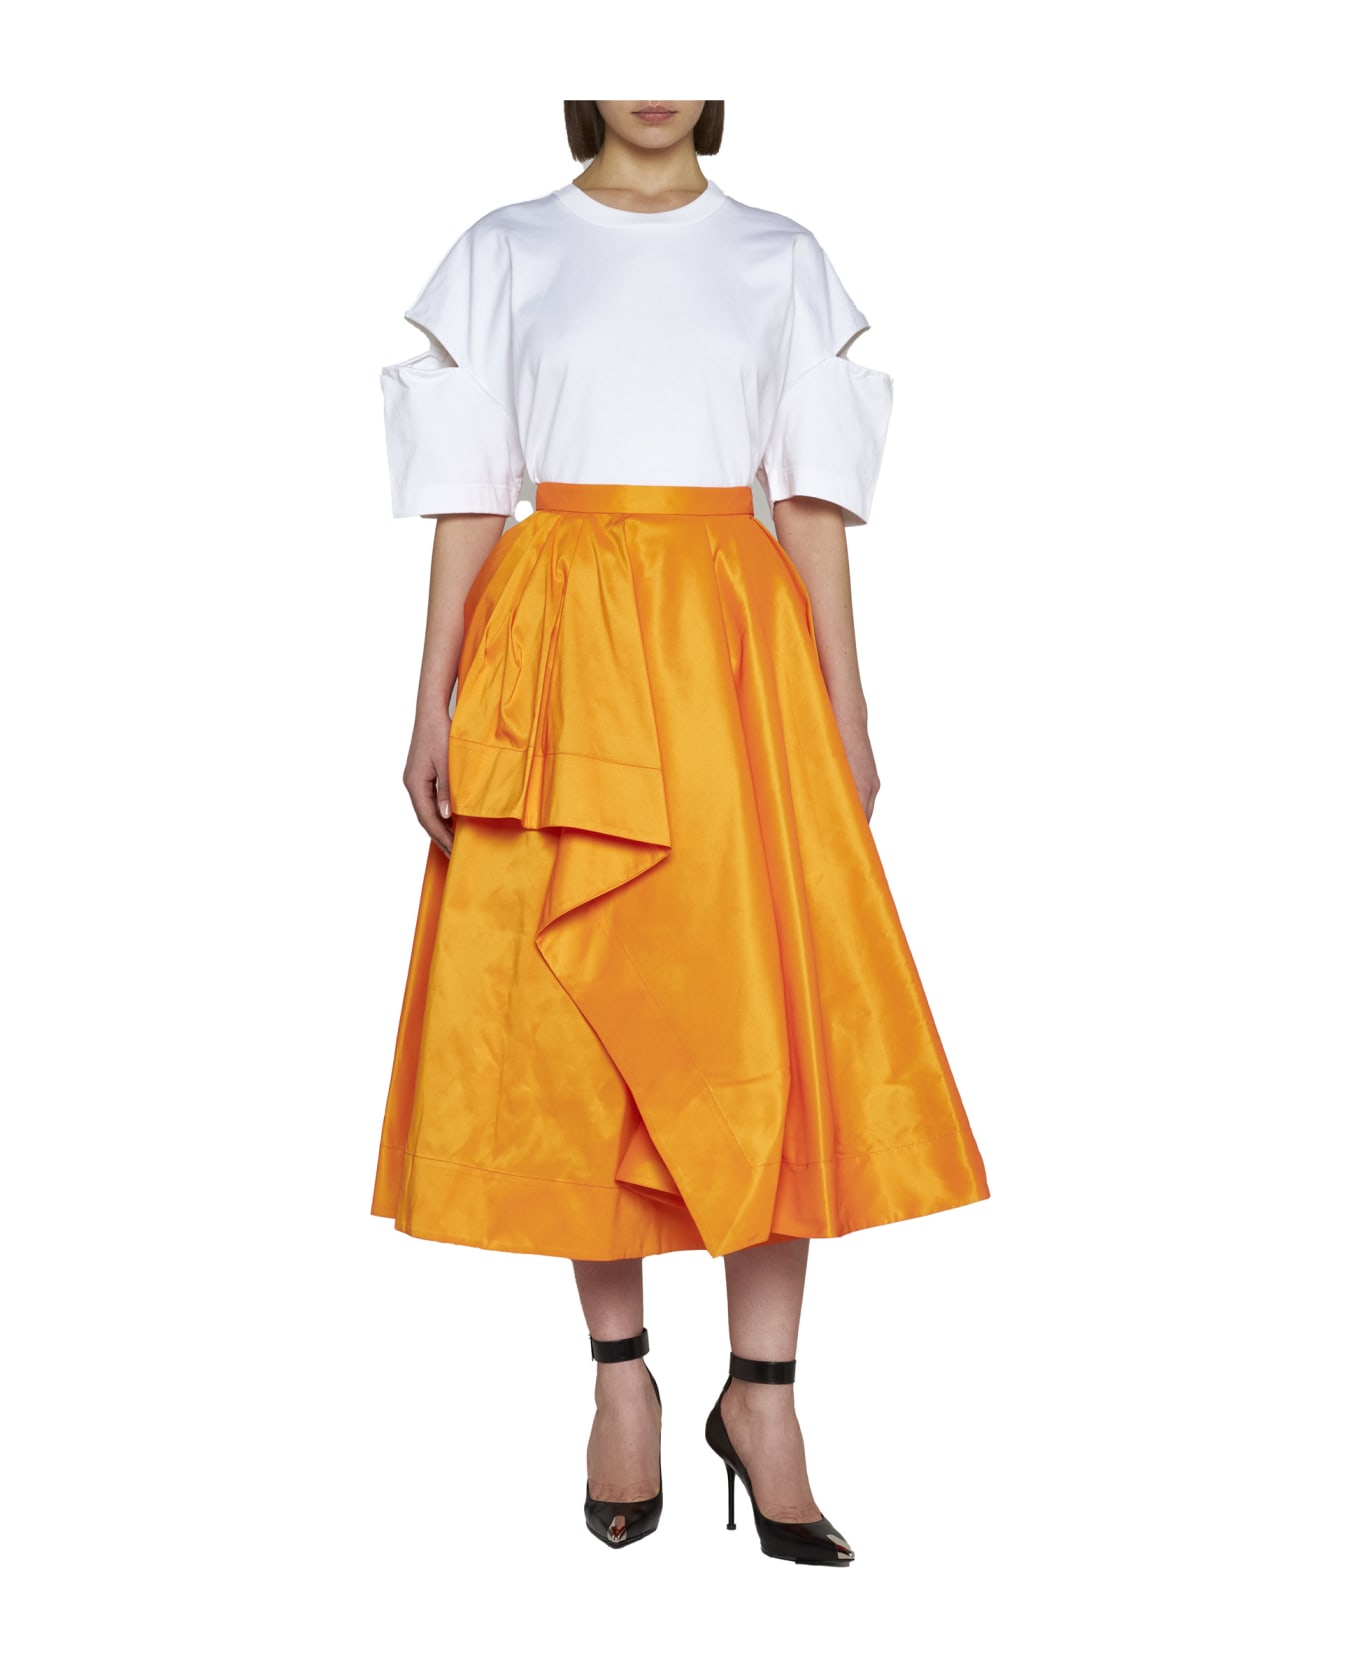 Alexander McQueen Skirt - Sunset orange